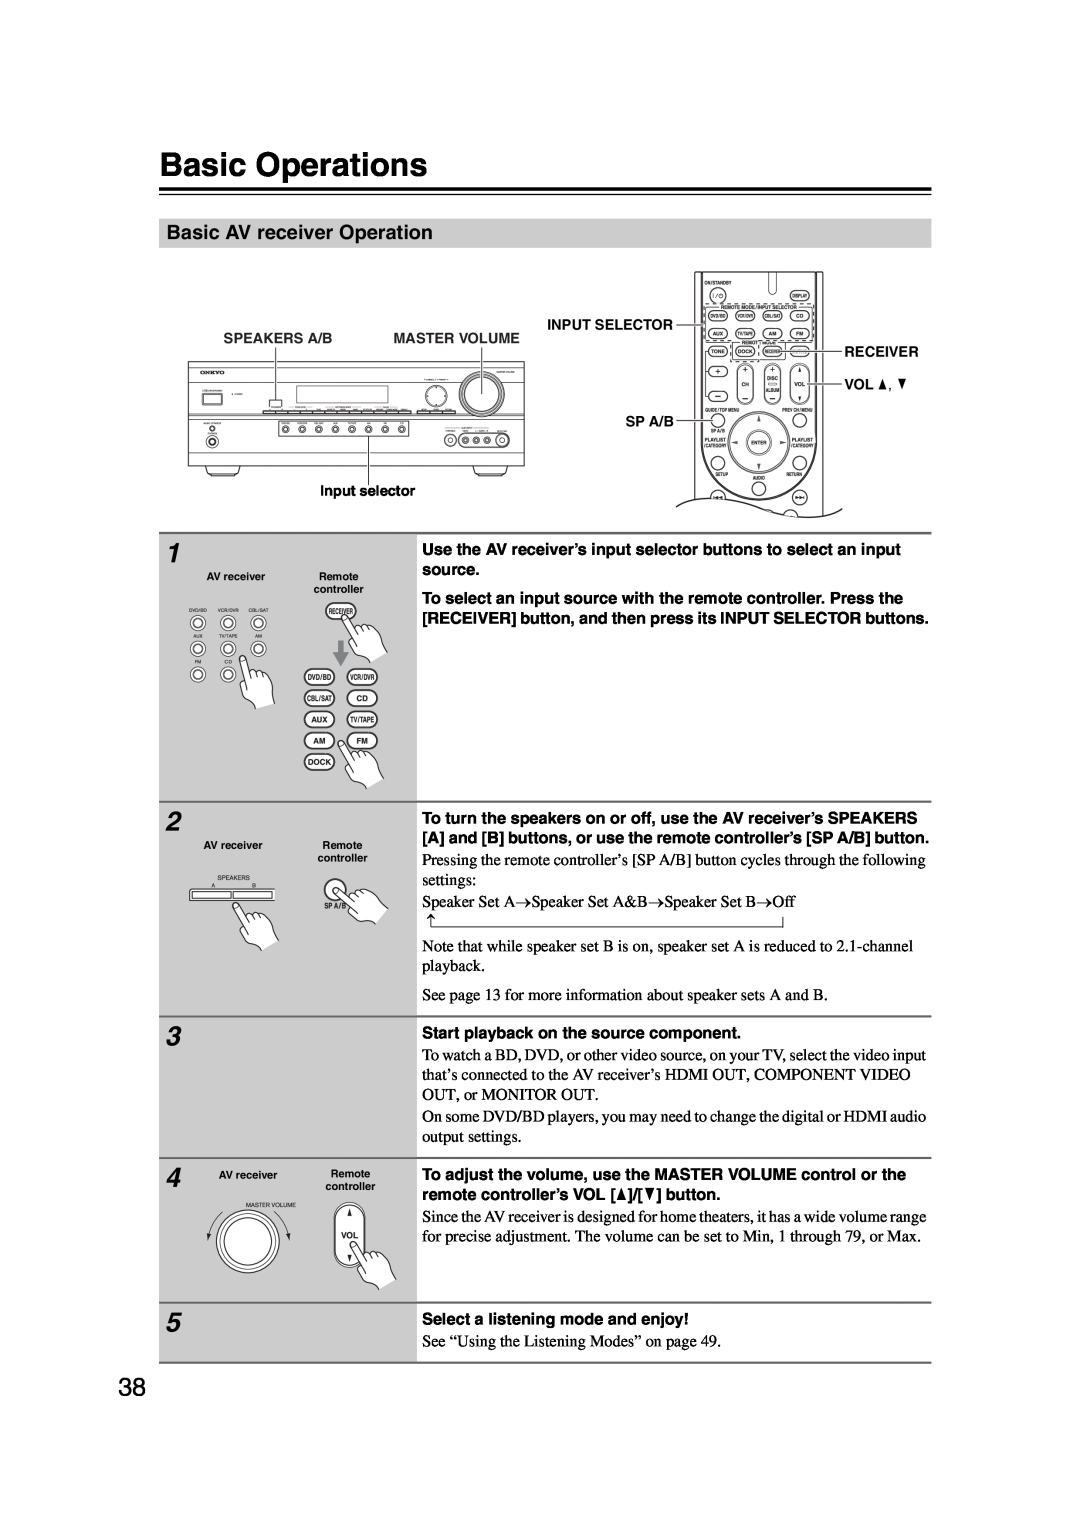 Onkyo TXSR307 instruction manual Basic Operations, Basic AV receiver Operation 